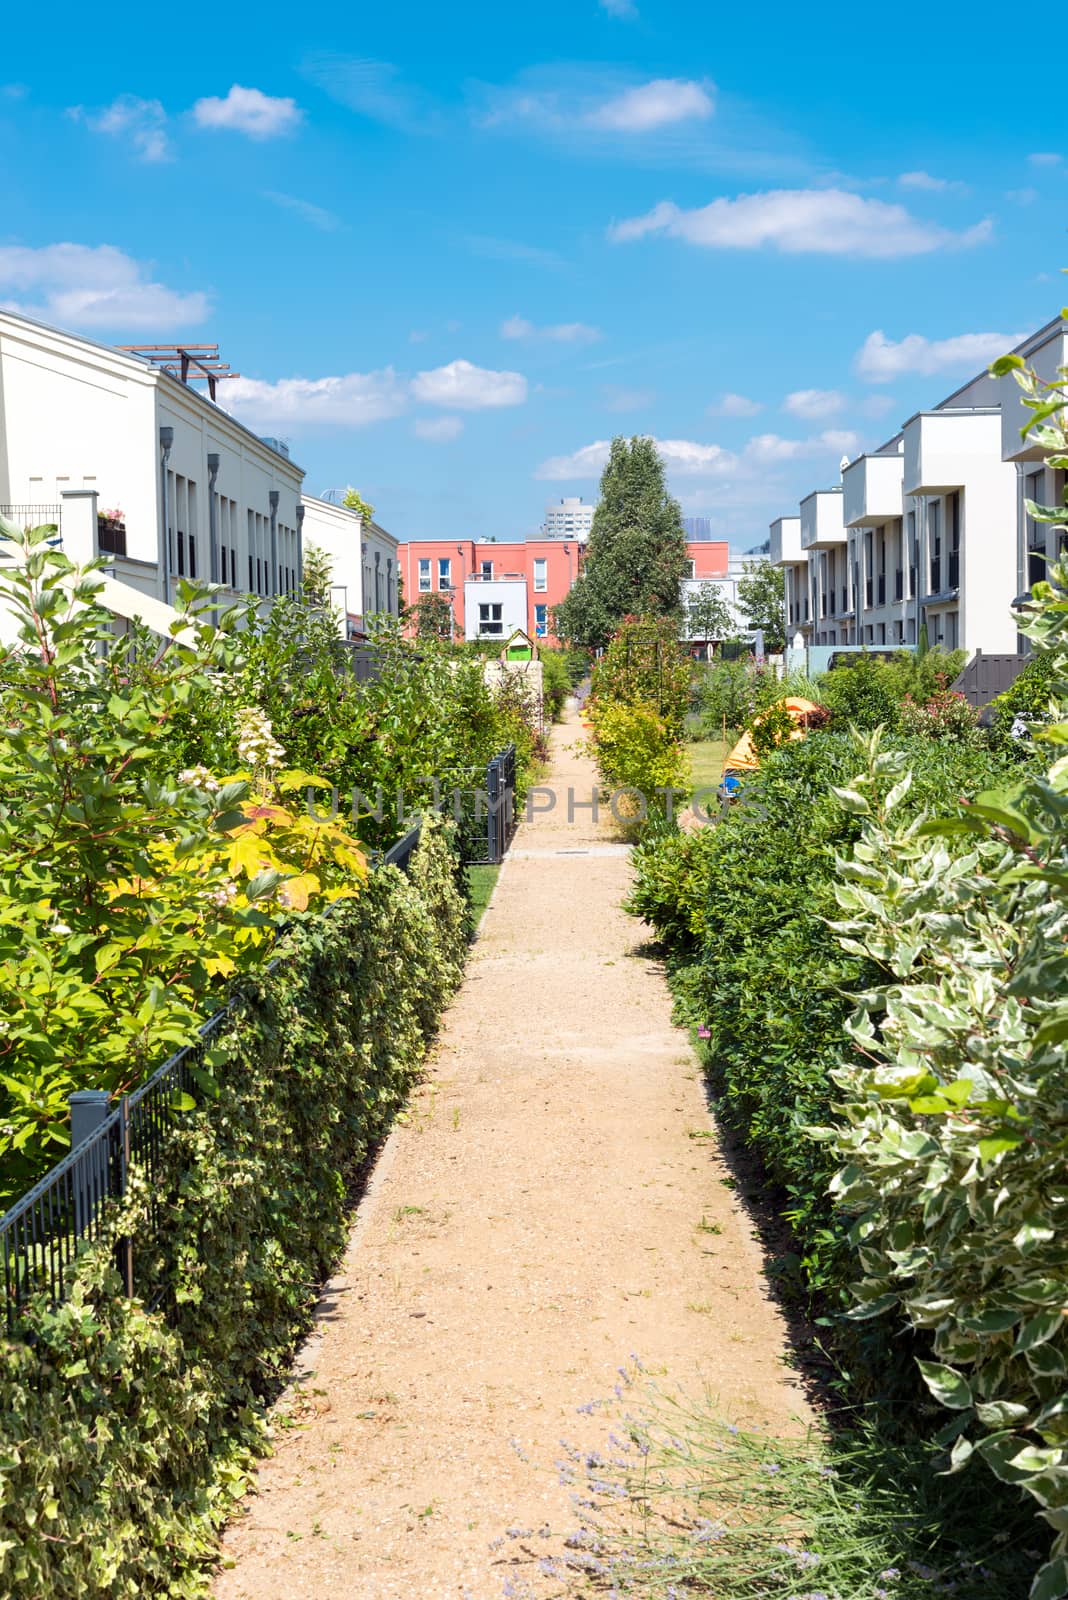 Modern serial houses with gardens seen in Berlin, Germany